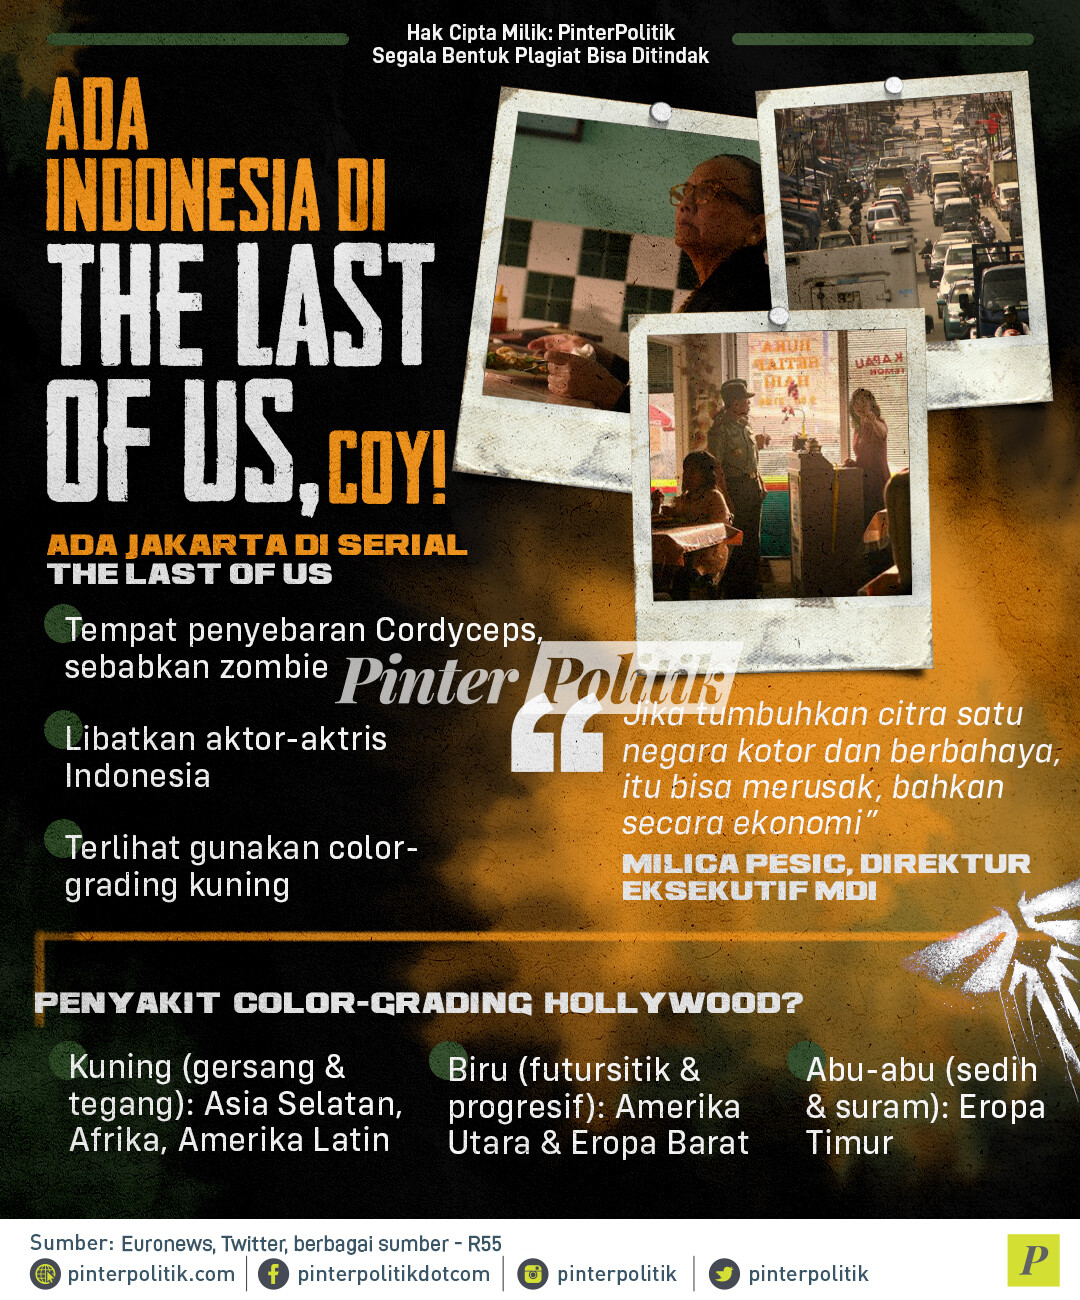 infografis ada indonesia di the last of us coy